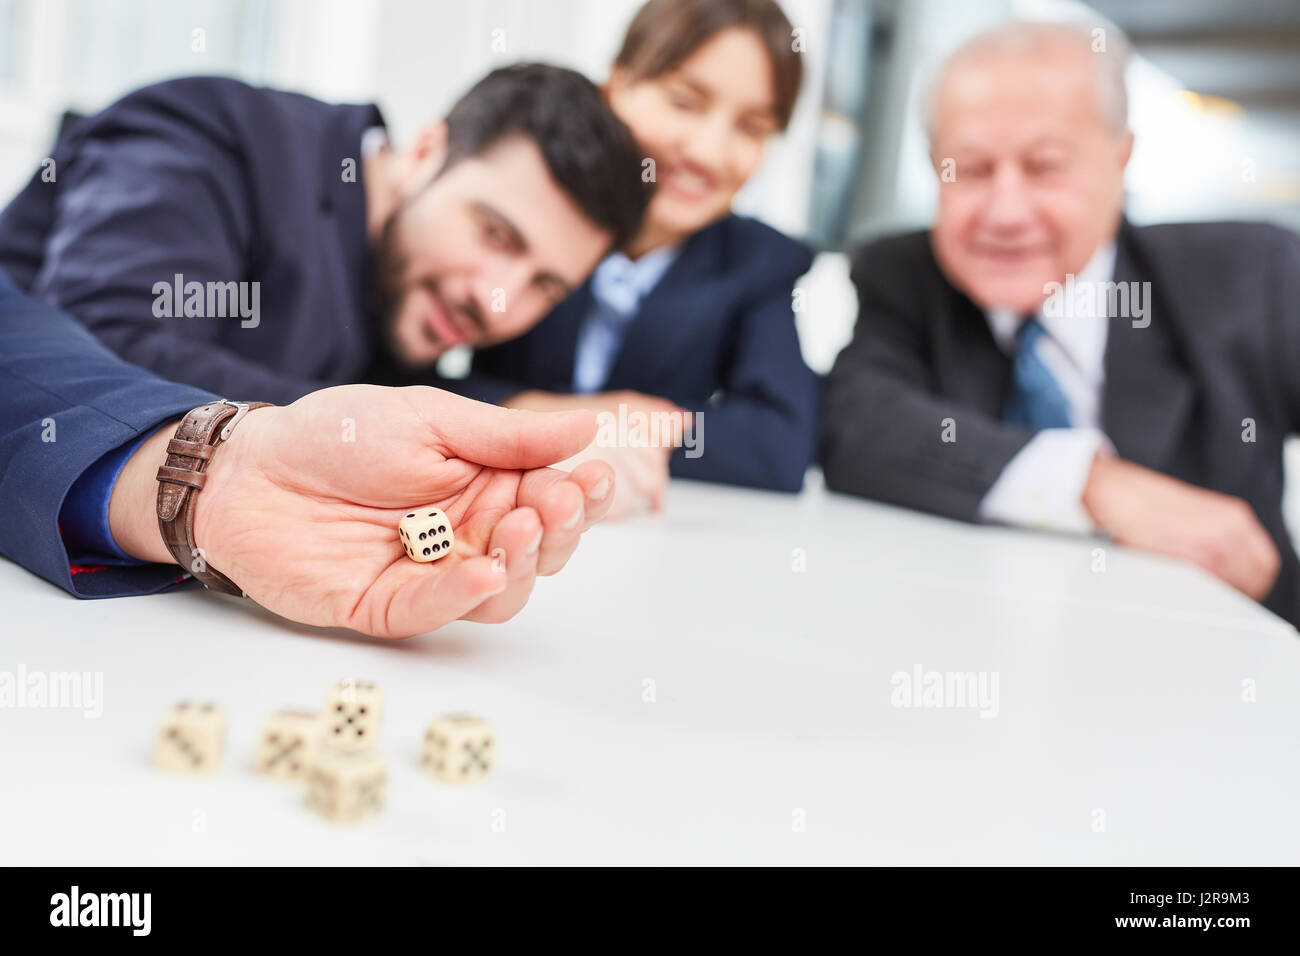 Team having fun playing dice game in business team building seminar Stock Photo